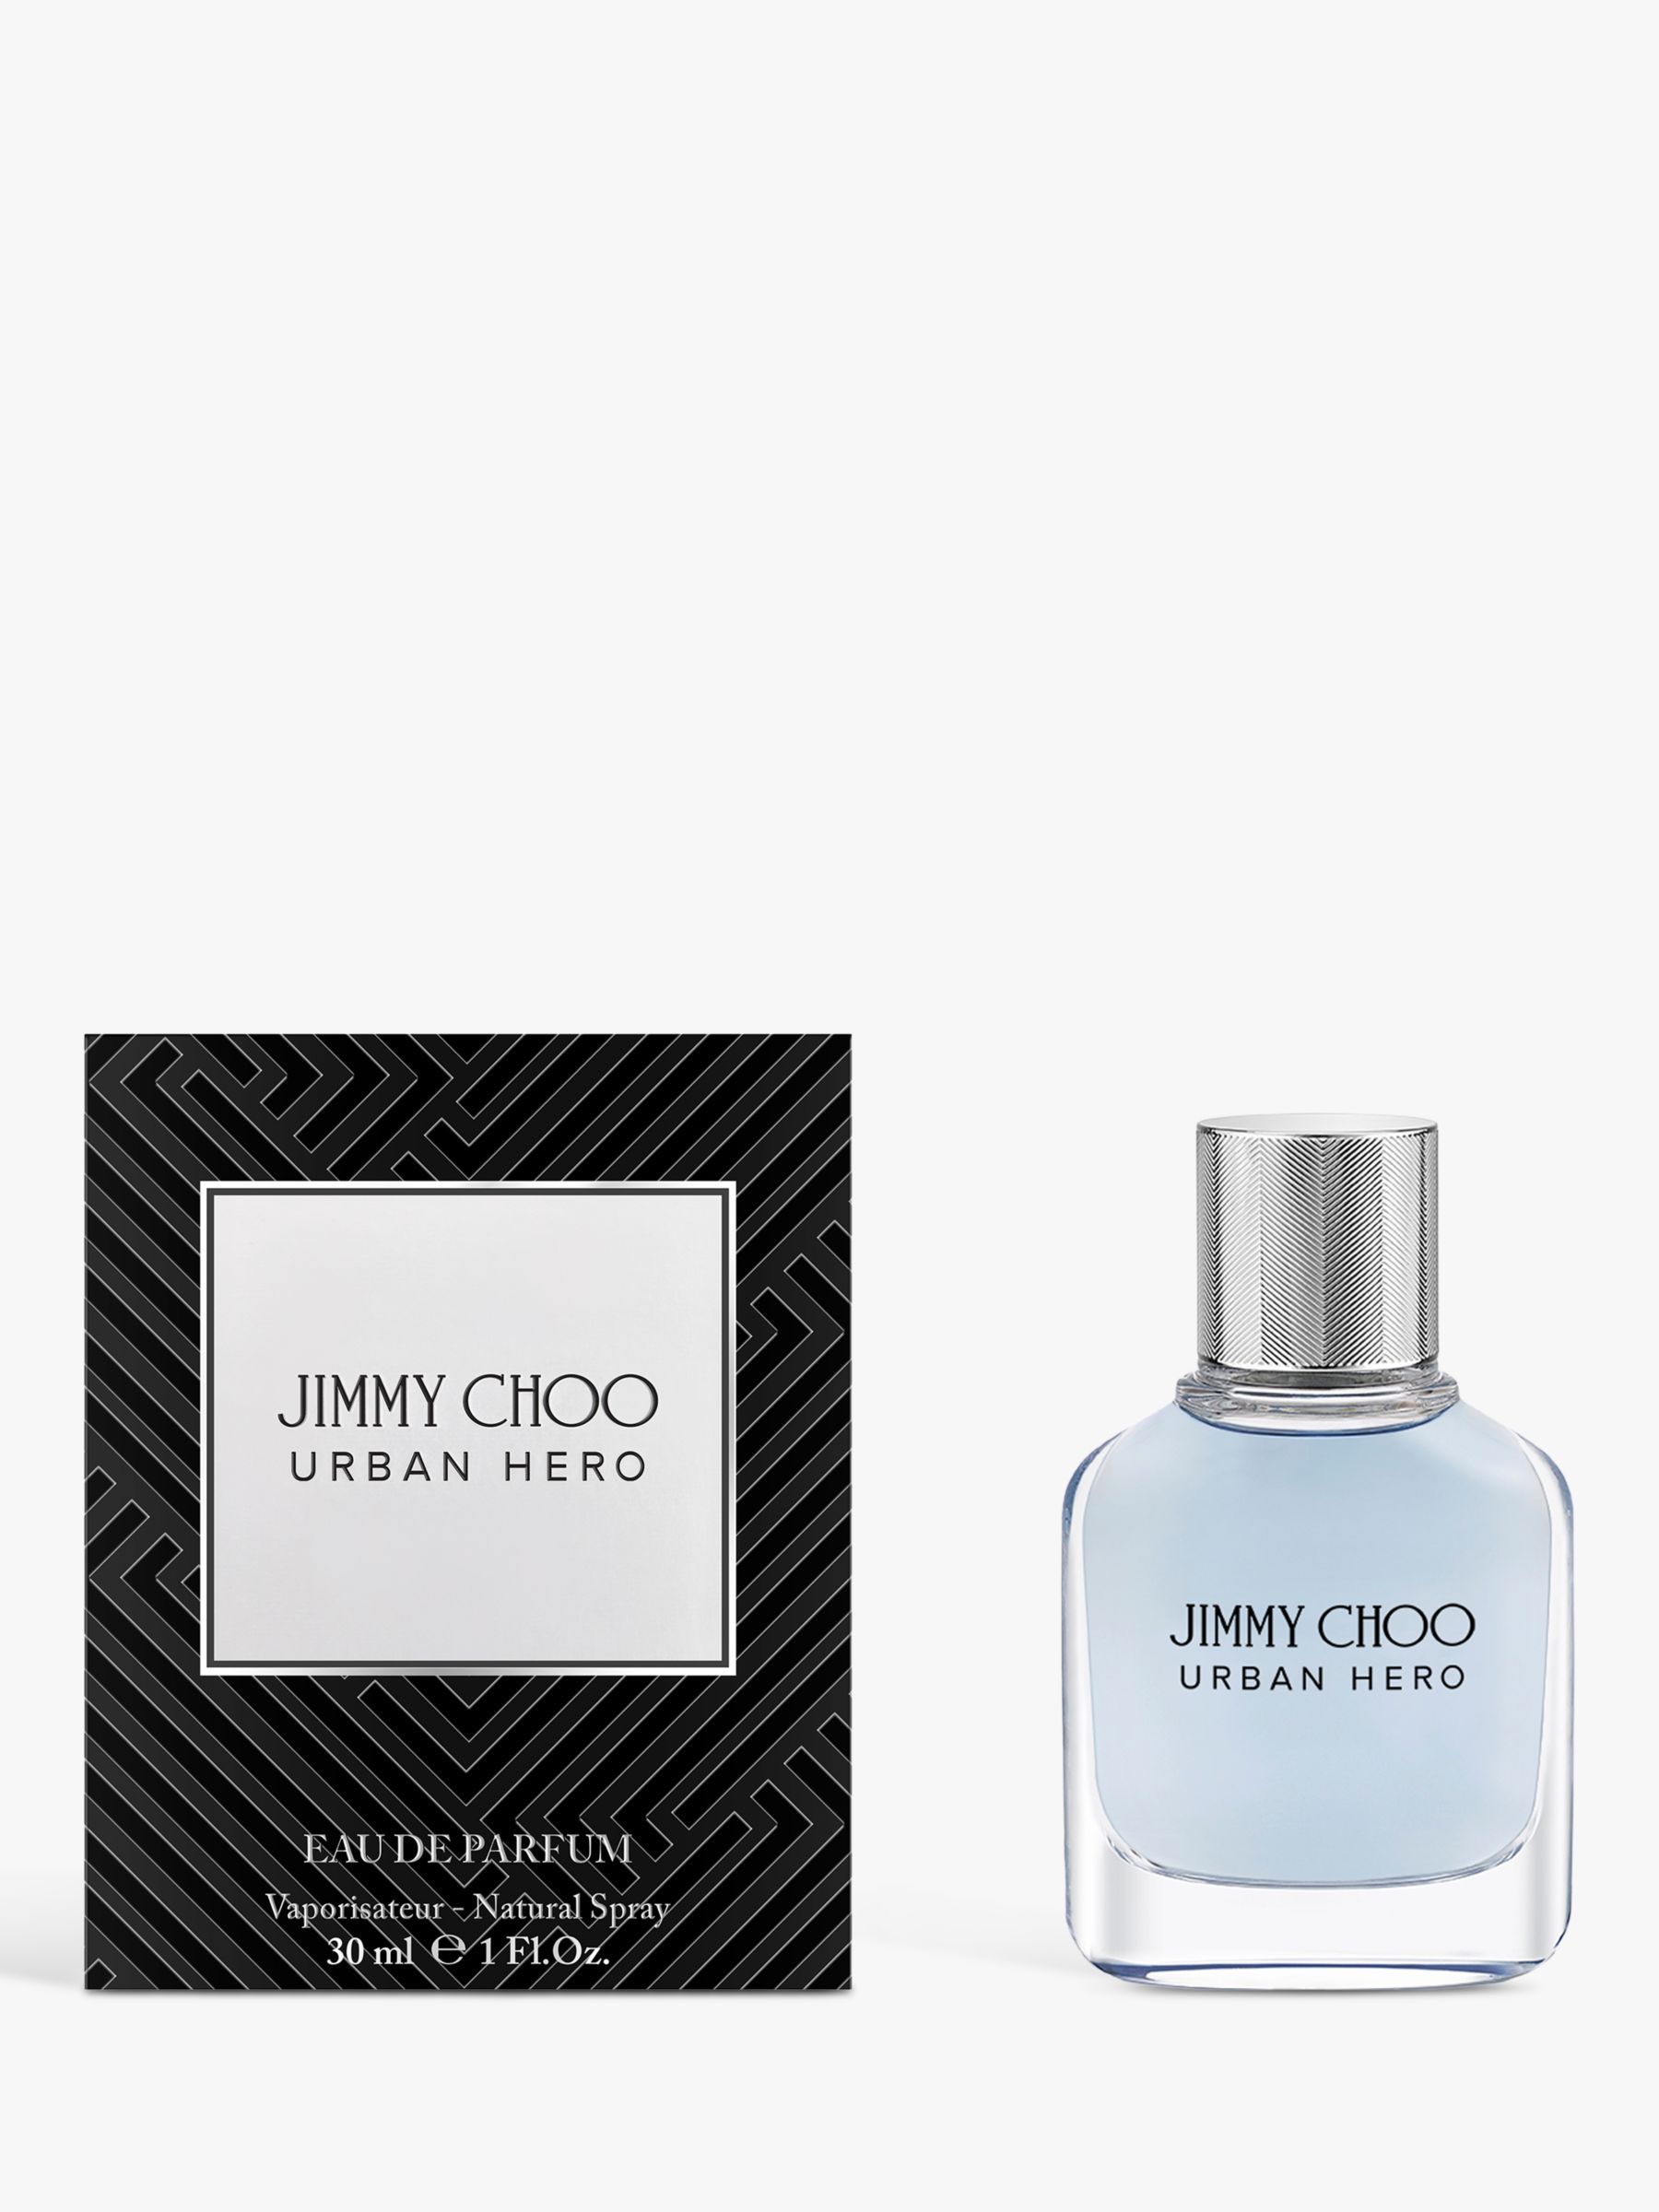 Jimmy Choo Urban Hero Eau de Parfum, 30ml 2